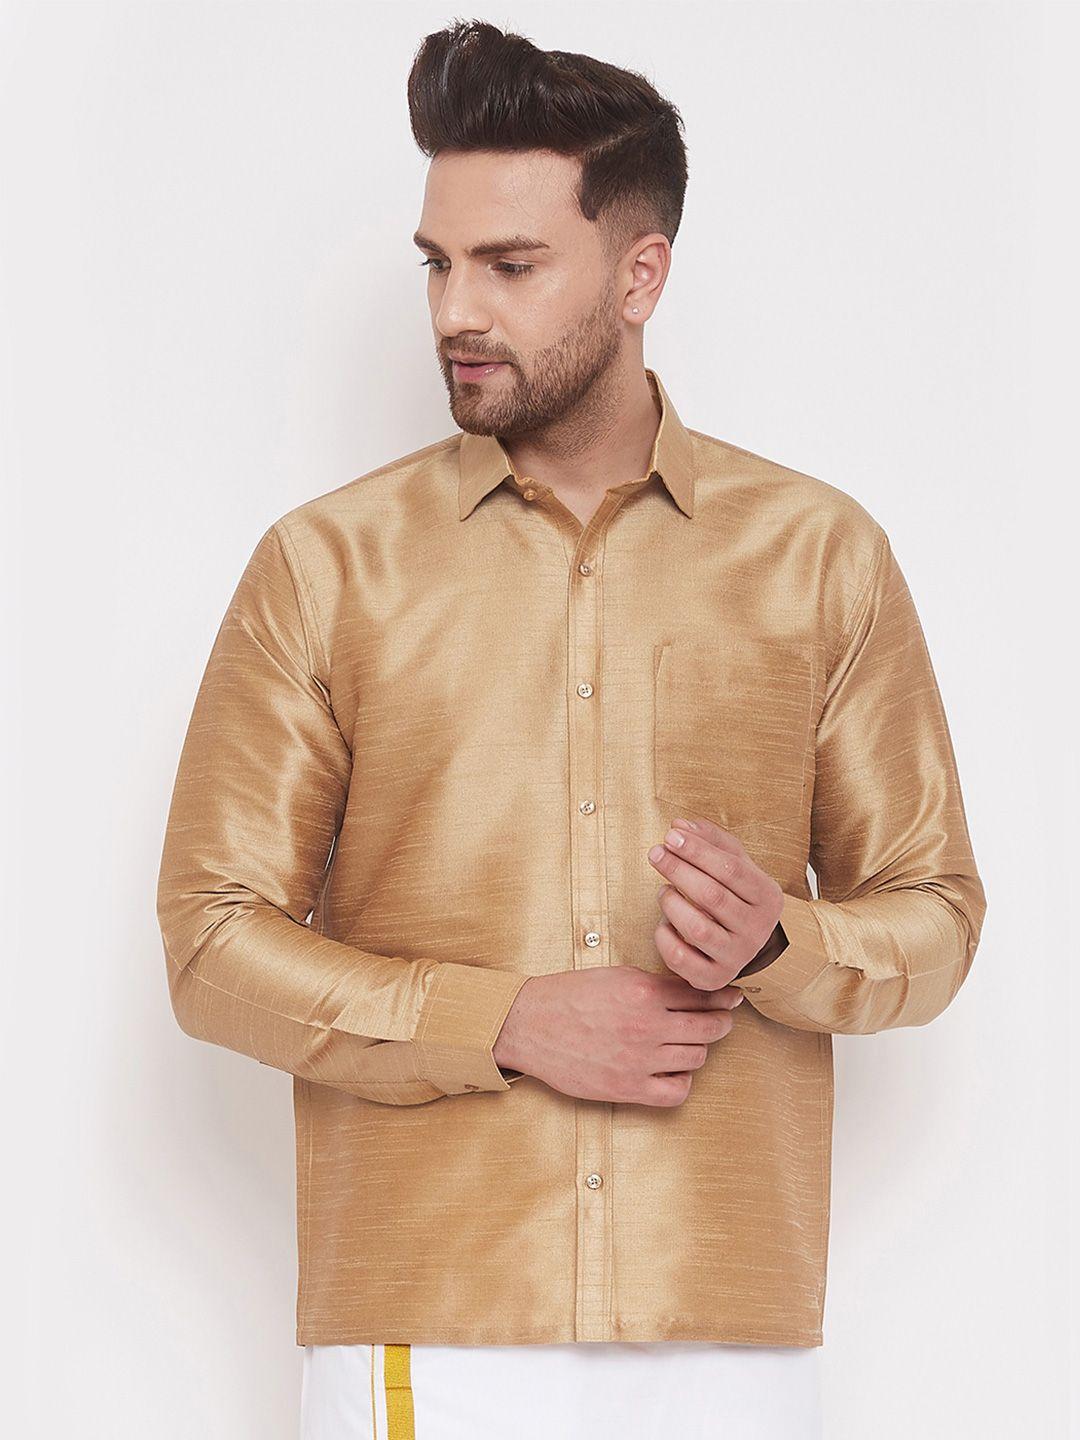 vm men premium opaque silk ethnic shirt